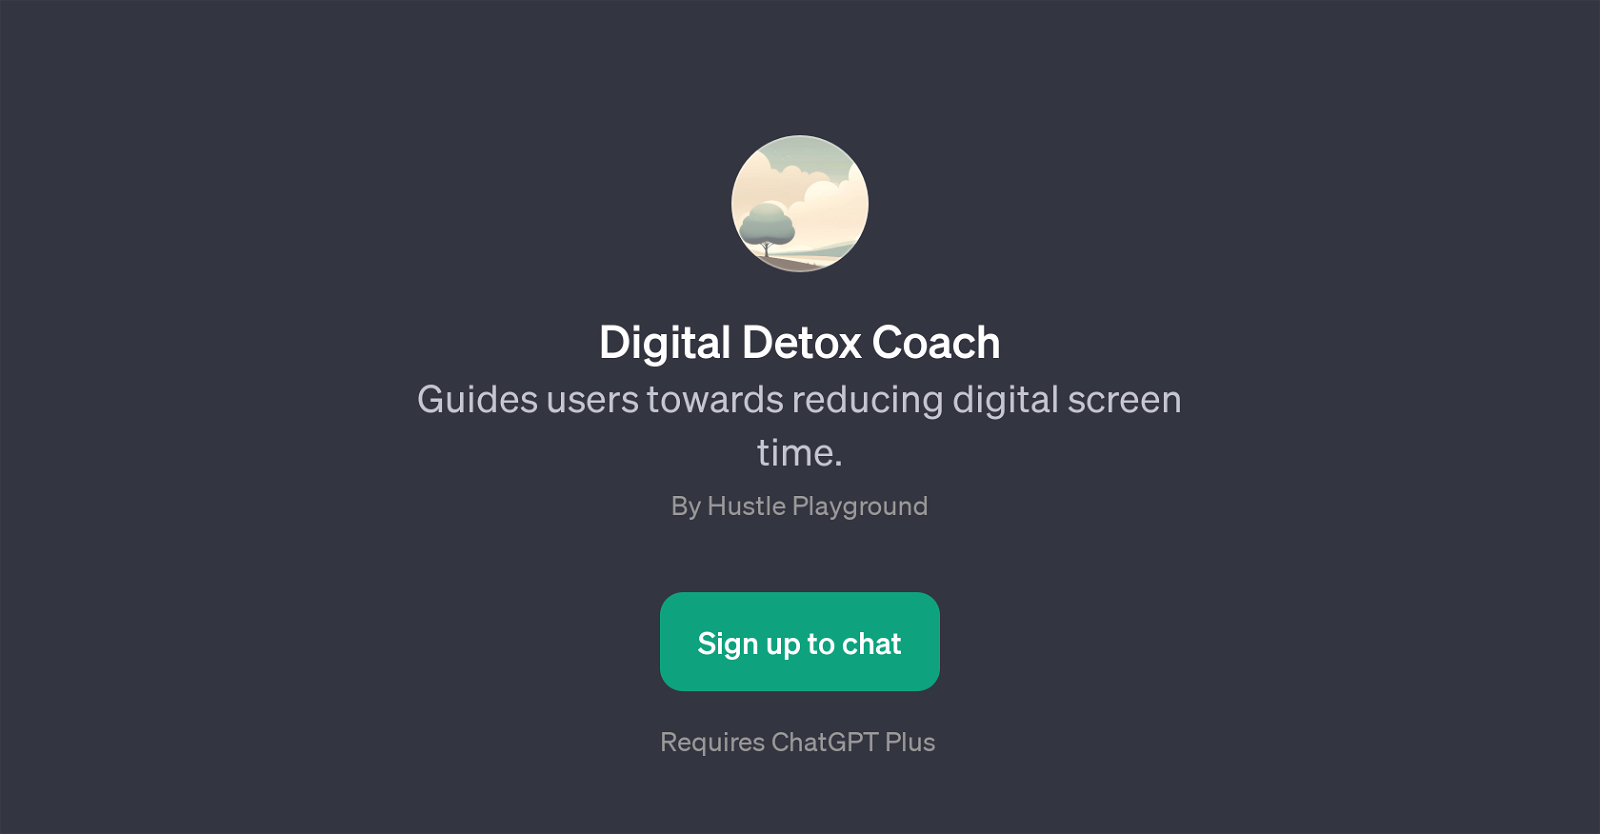 Digital Detox Coach website